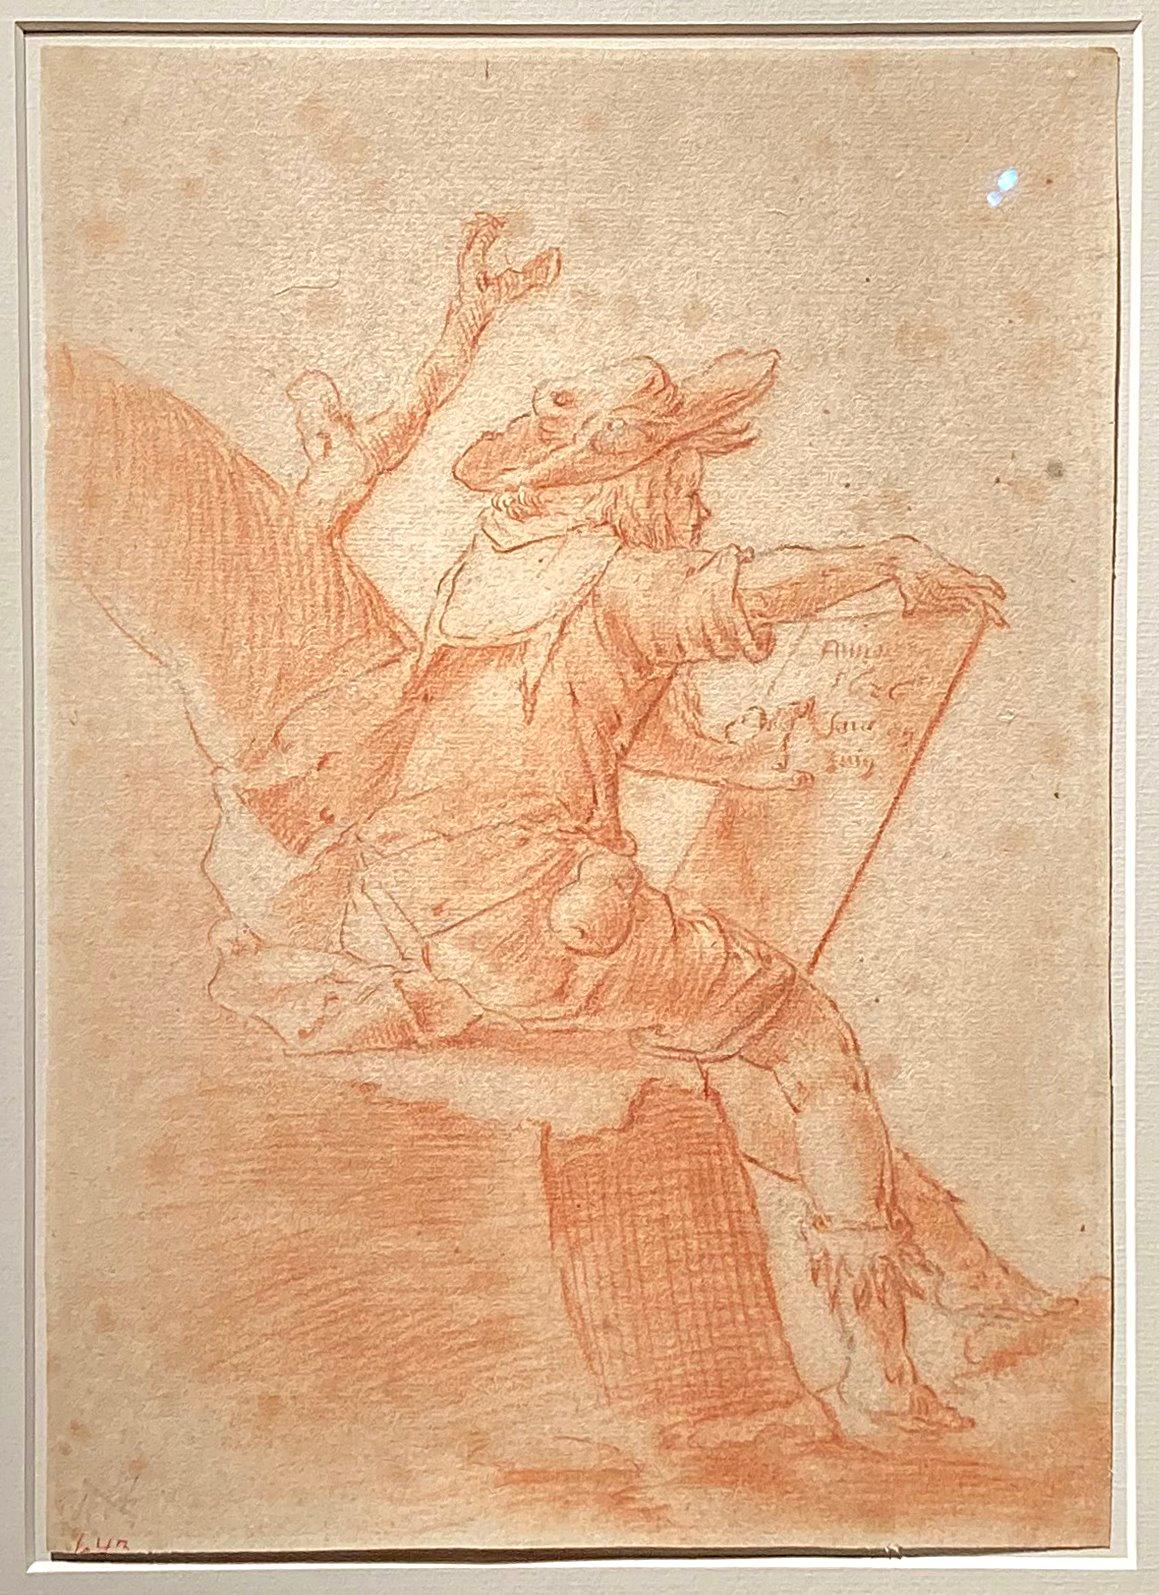 Old Master Drawing, Self Portrait Artist, Figurative, 17th Century, German